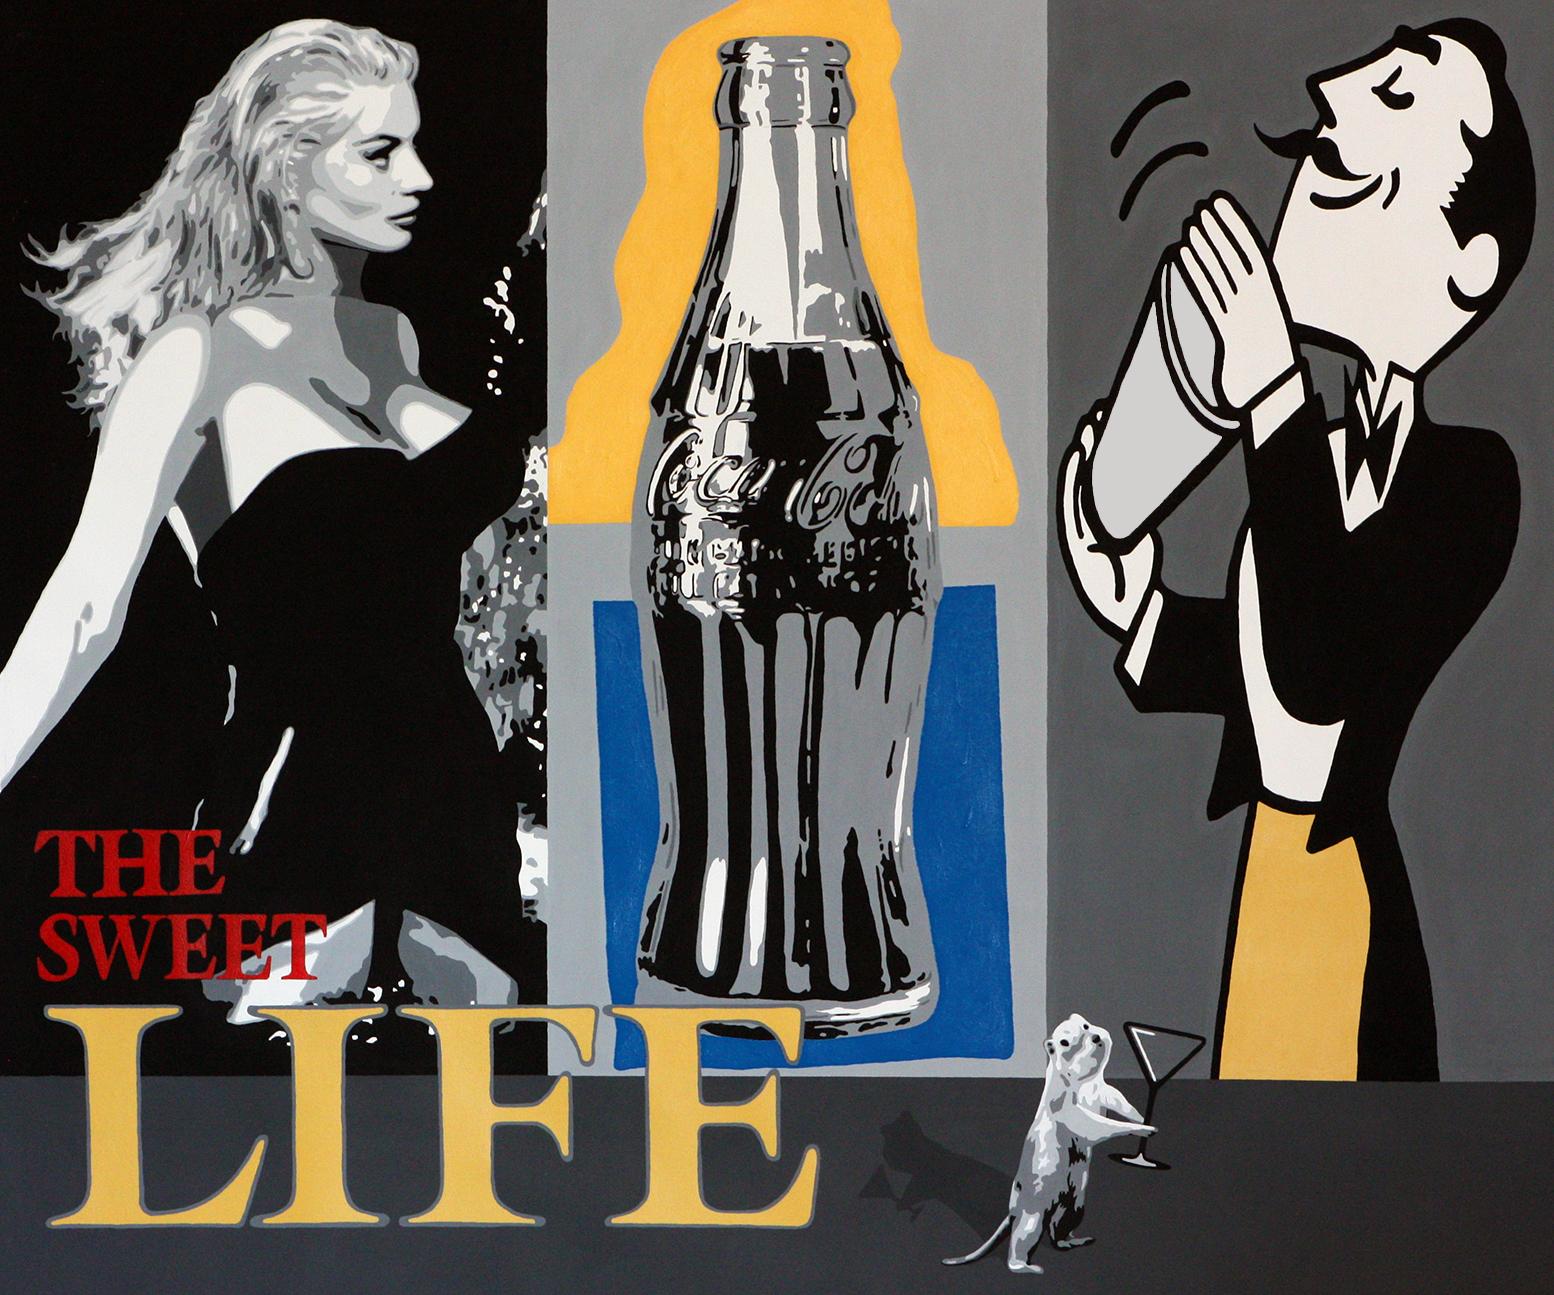 Das süße Leben, ITALY La Dolce Vita, Großes Ölgemälde und Acryl auf Leinwand, 52x62"